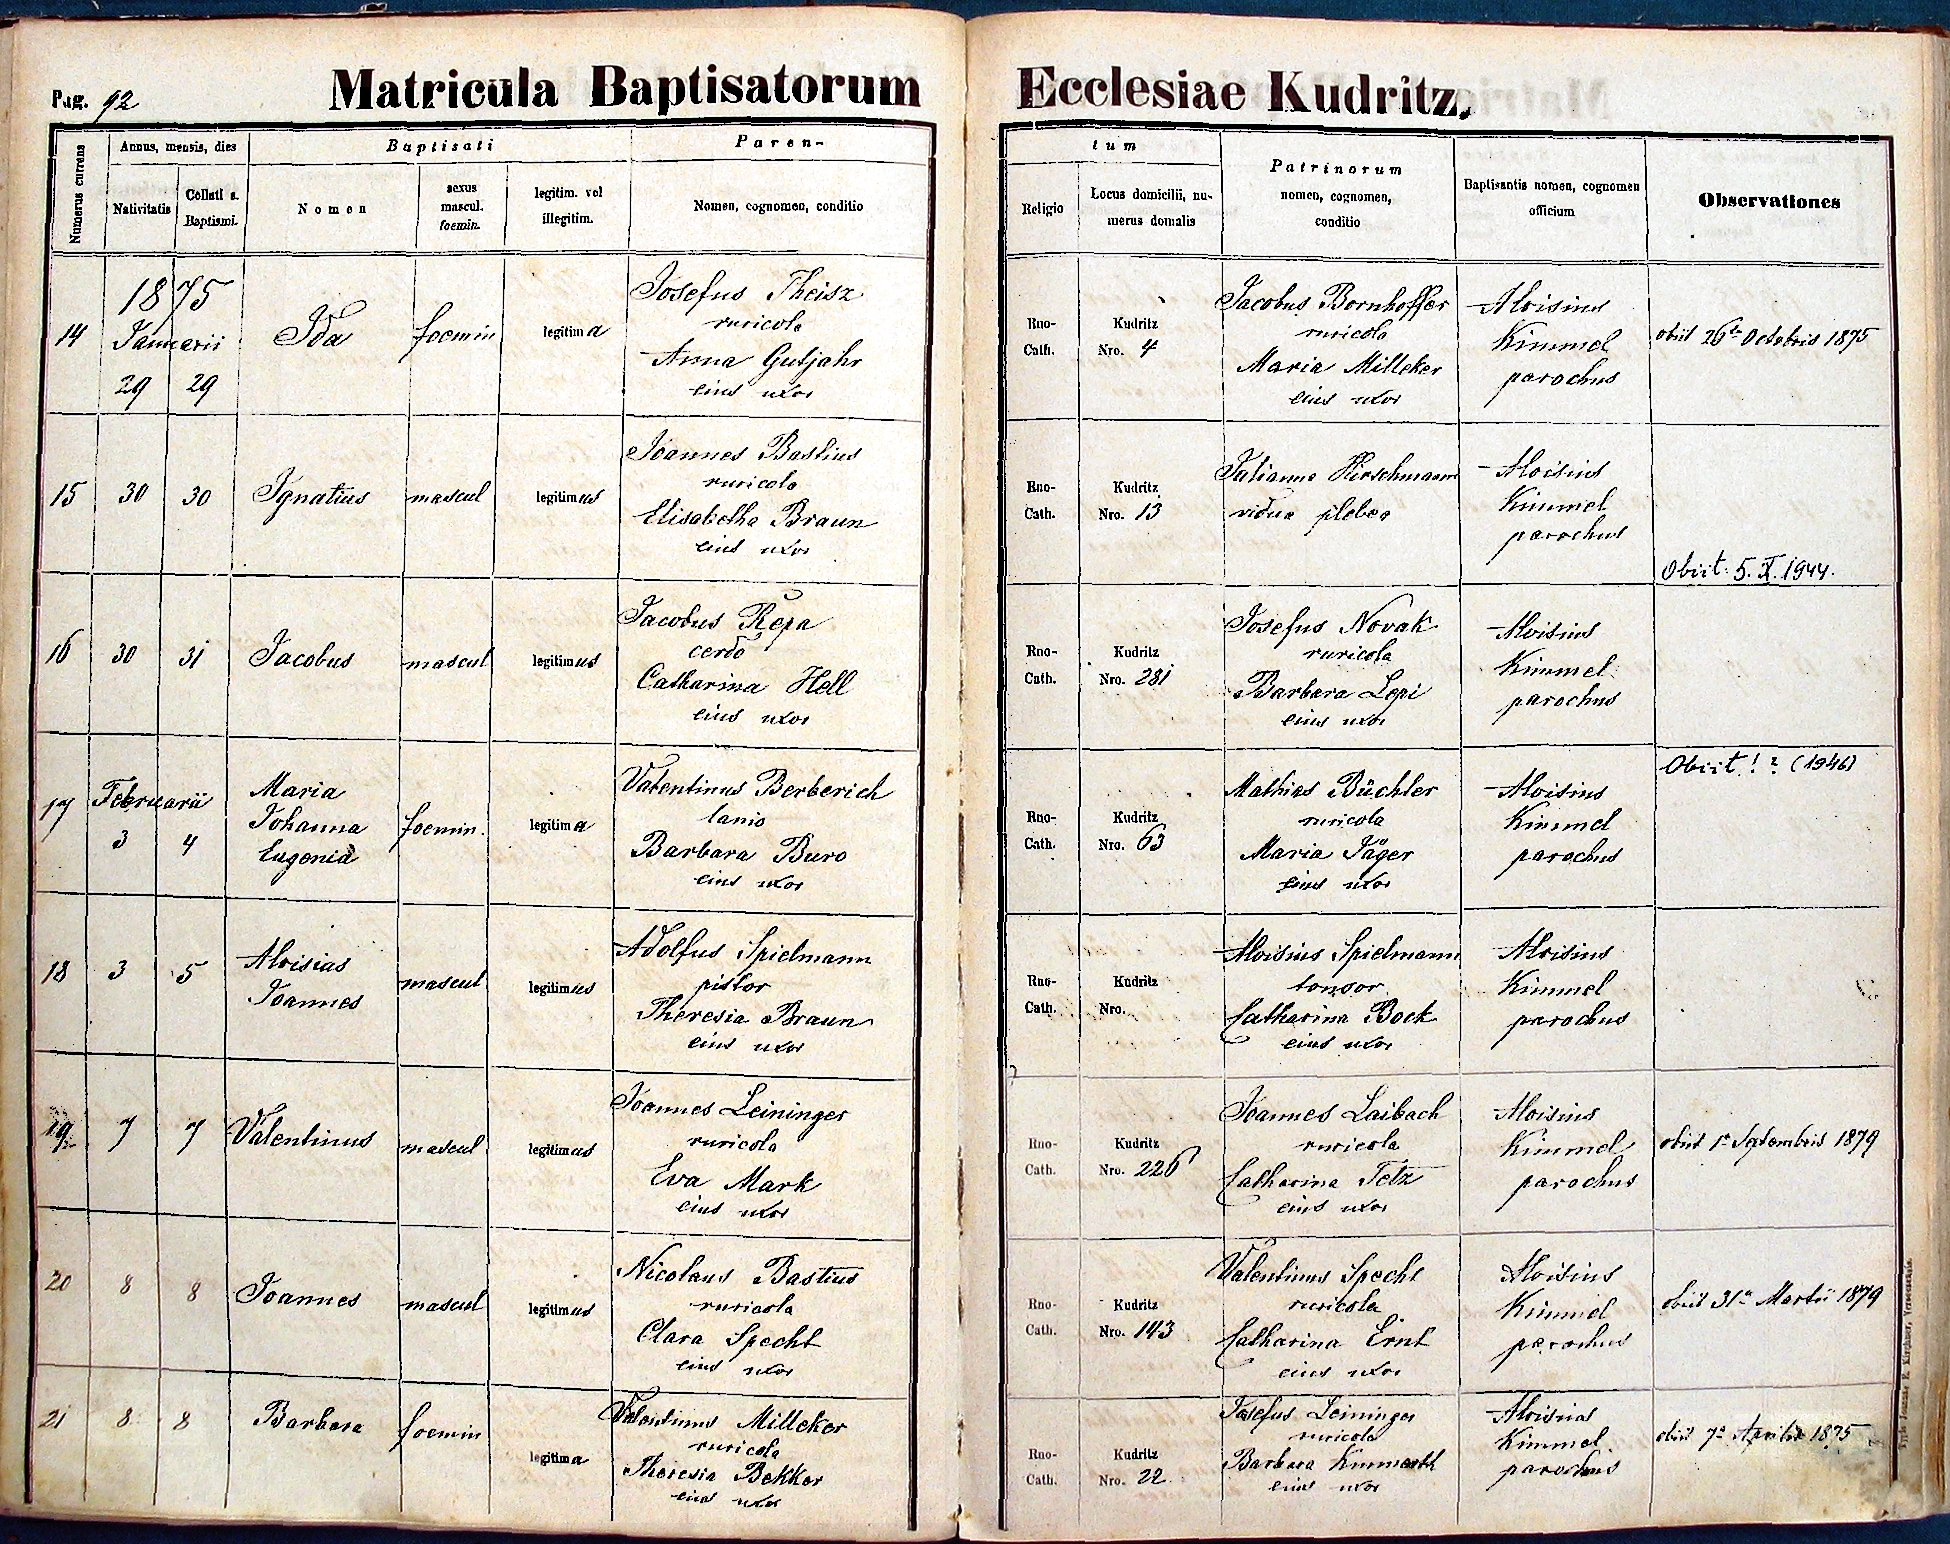 images/church_records/BIRTHS/1884-1899B/1889/092